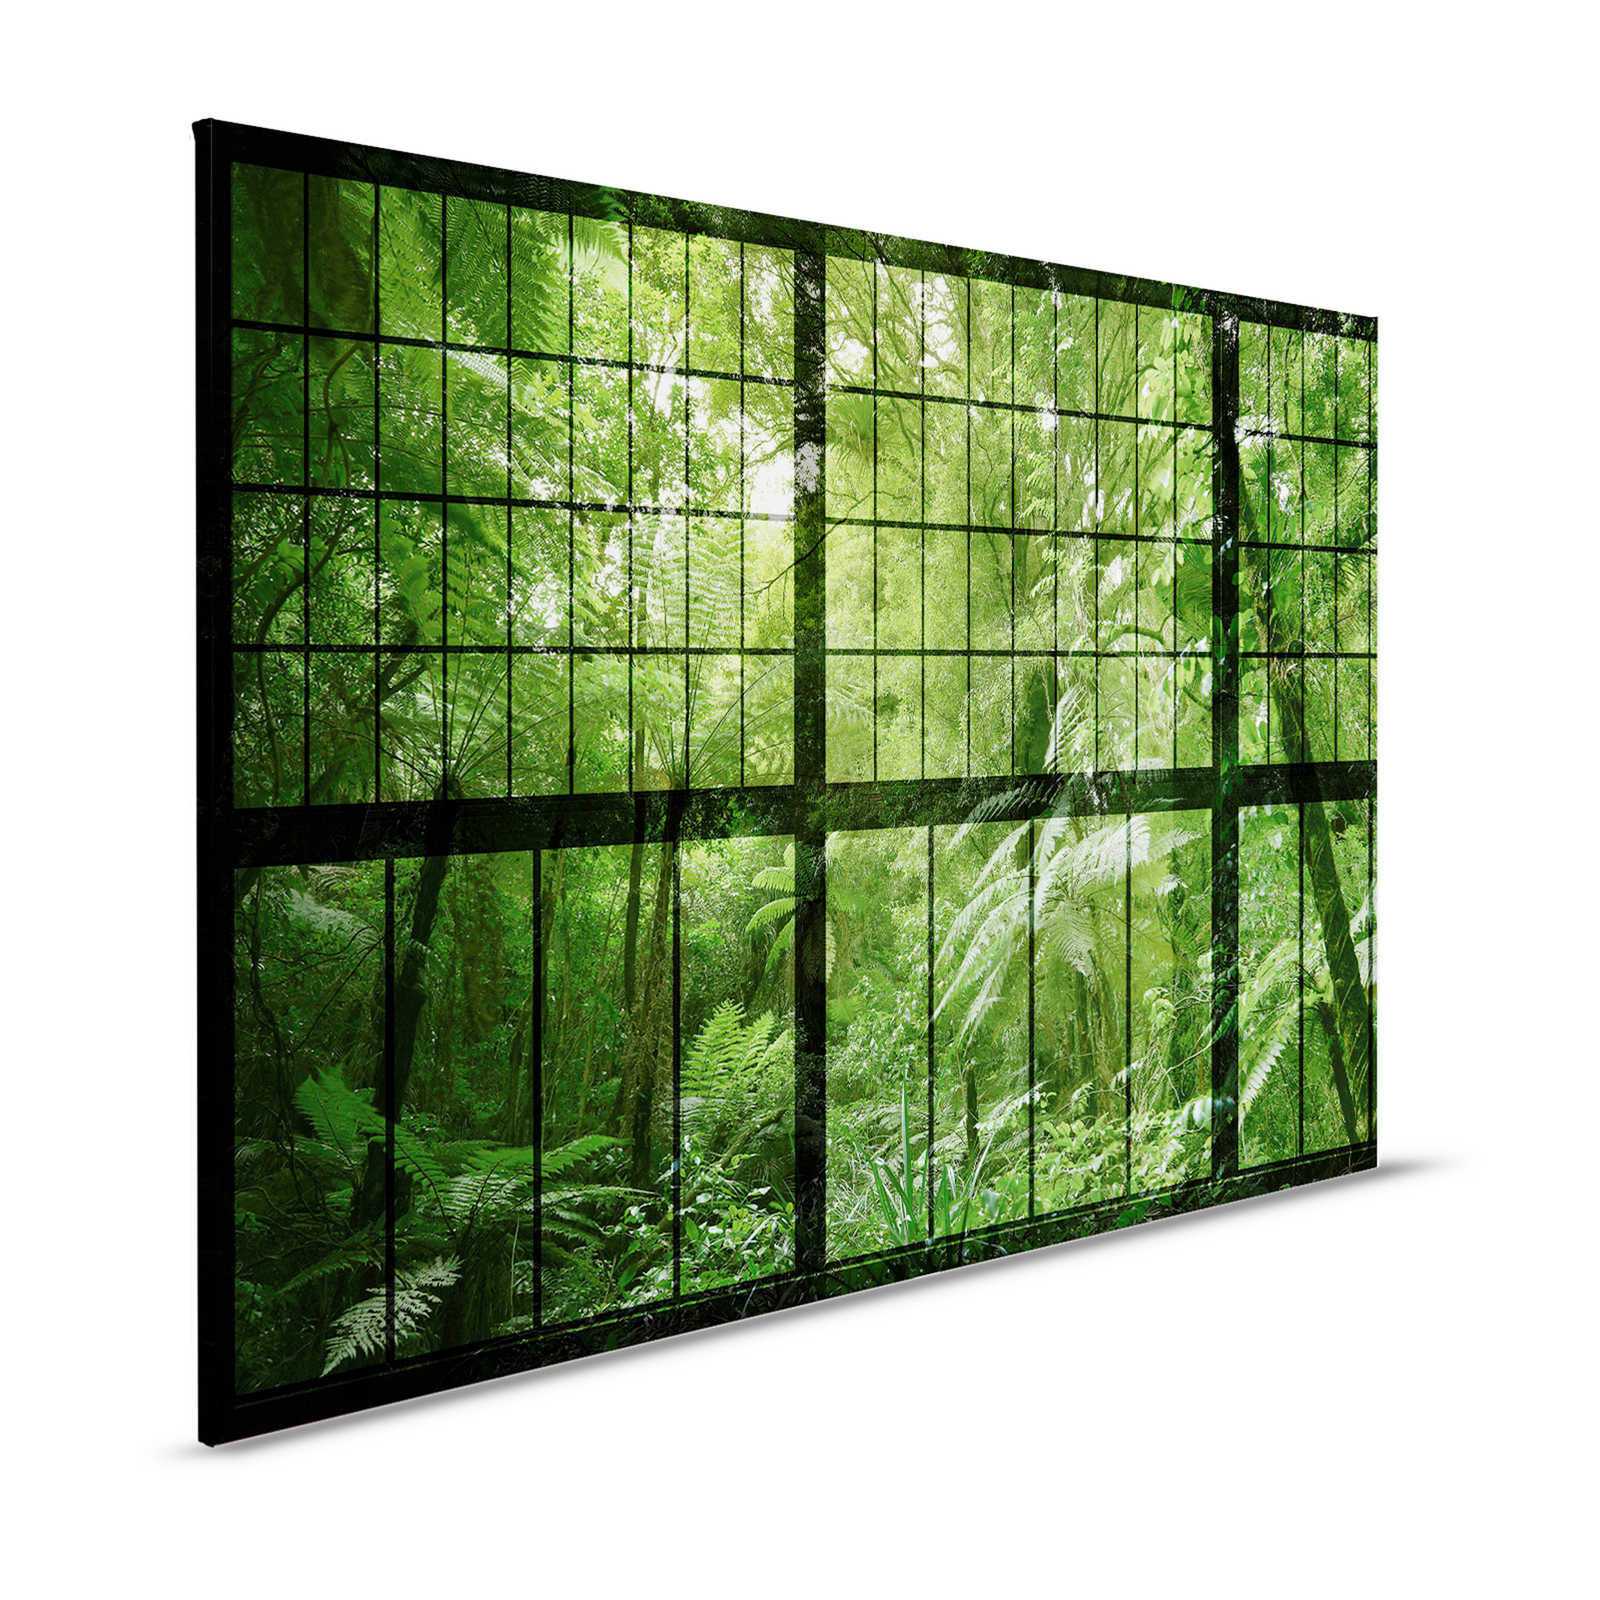 Rainforest 2 - Loft Window Canvas Painting with Jungle View - 1.20 m x 0.80 m
